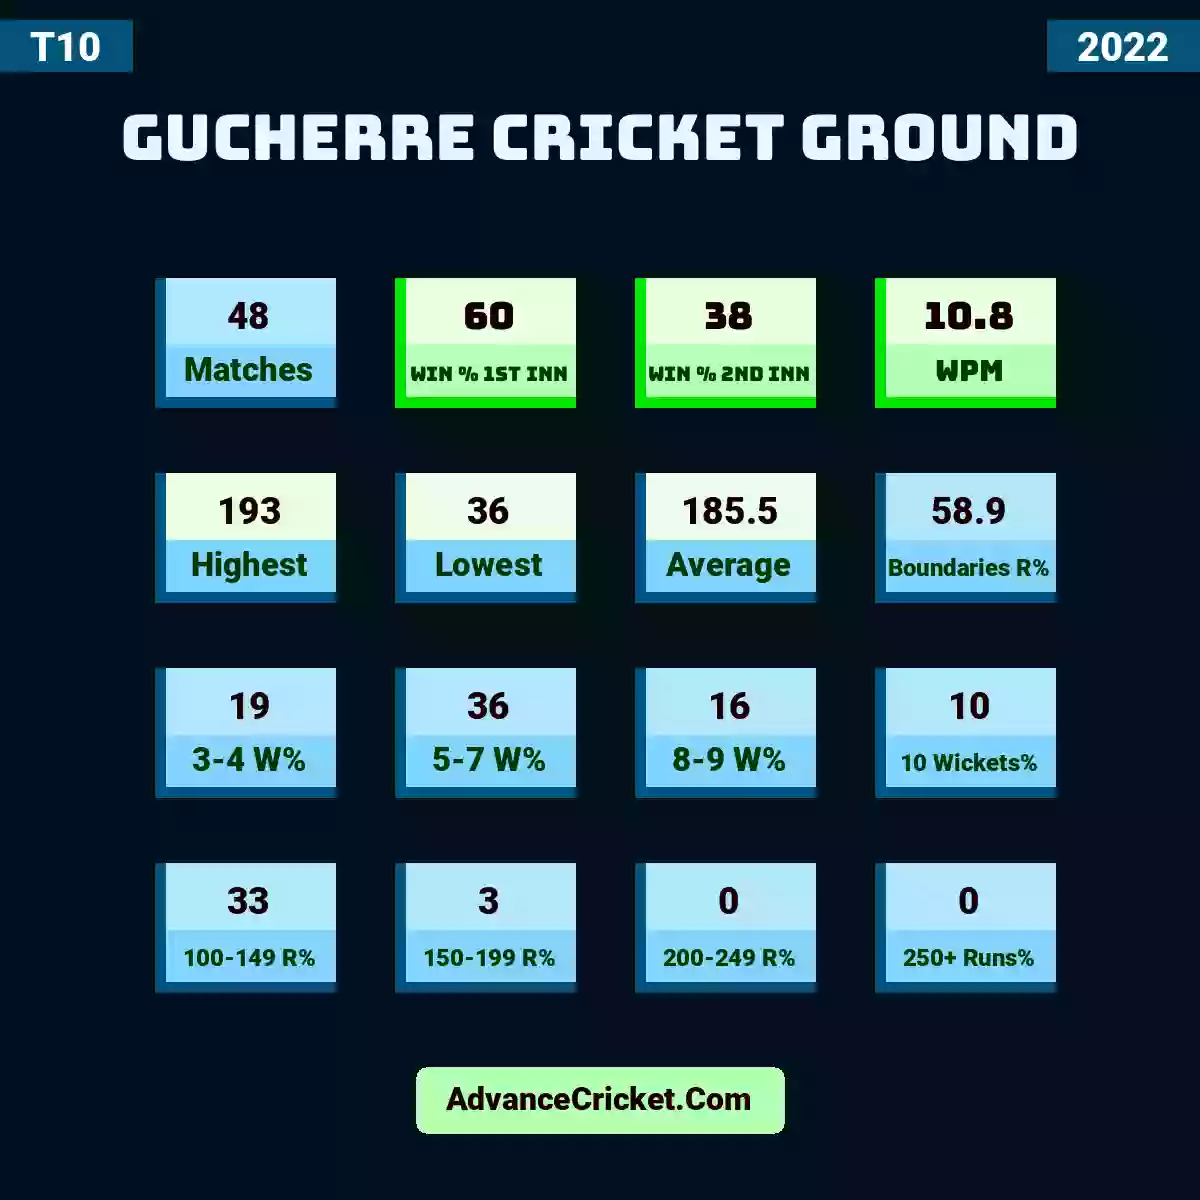 Image showing Gucherre Cricket Ground with Matches: 48, Win % 1st Inn: 60, Win % 2nd Inn: 38, WPM: 10.8, Highest: 193, Lowest: 36, Average: 185.5, Boundaries R%: 58.9, 3-4 W%: 19, 5-7 W%: 36, 8-9 W%: 16, 10 Wickets%: 10, 100-149 R%: 33, 150-199 R%: 3, 200-249 R%: 0, 250+ Runs%: 0.